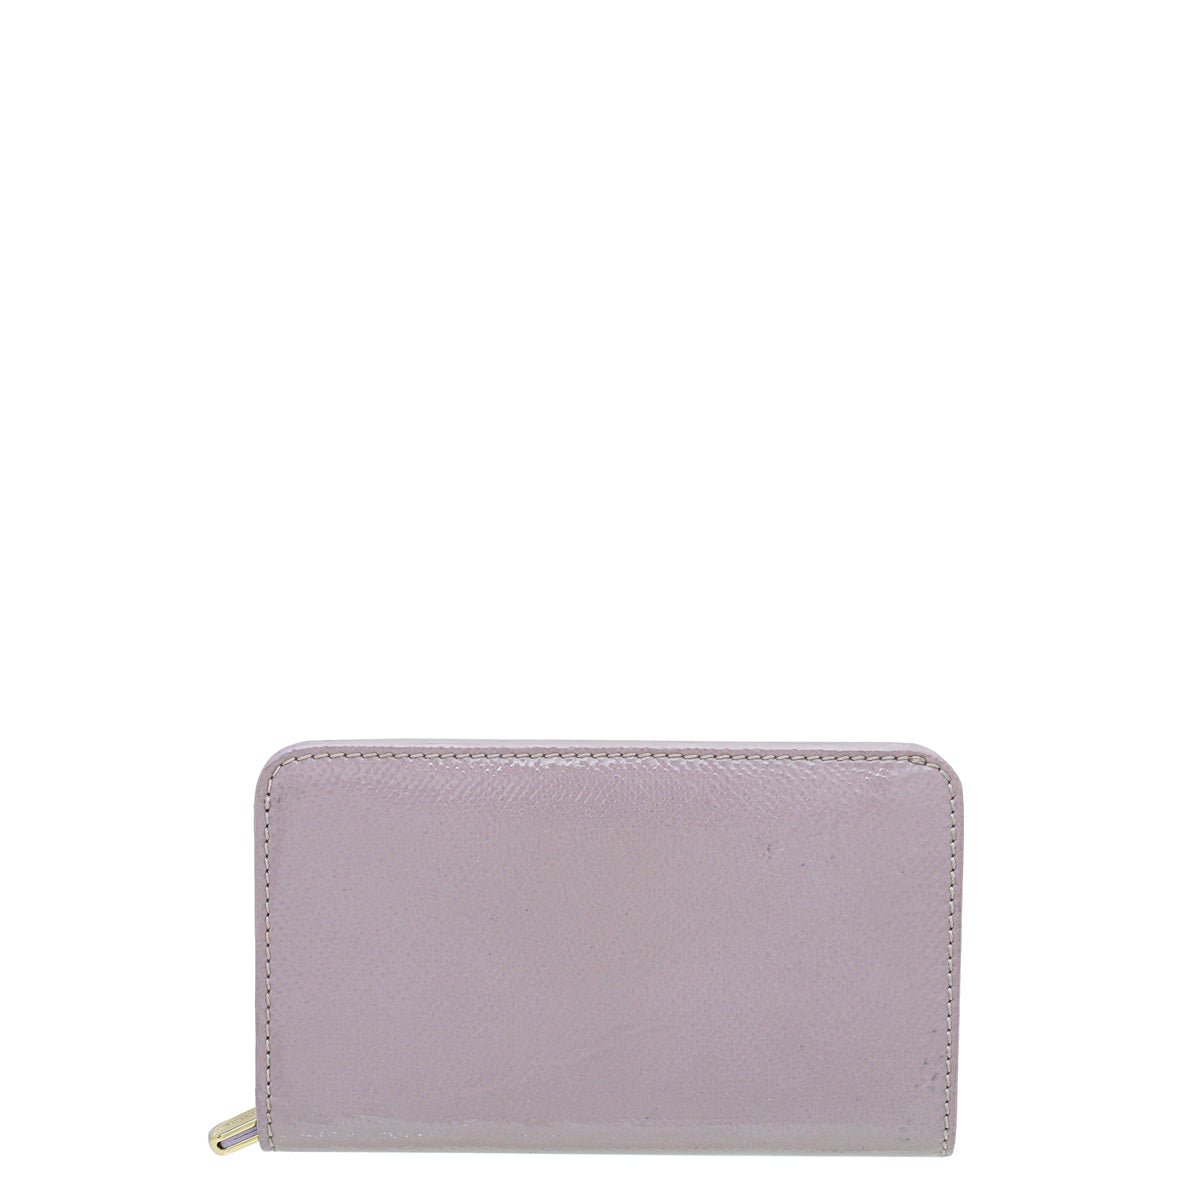 Burberry - Burberry Pink Purple Medium Wallet | The Closet